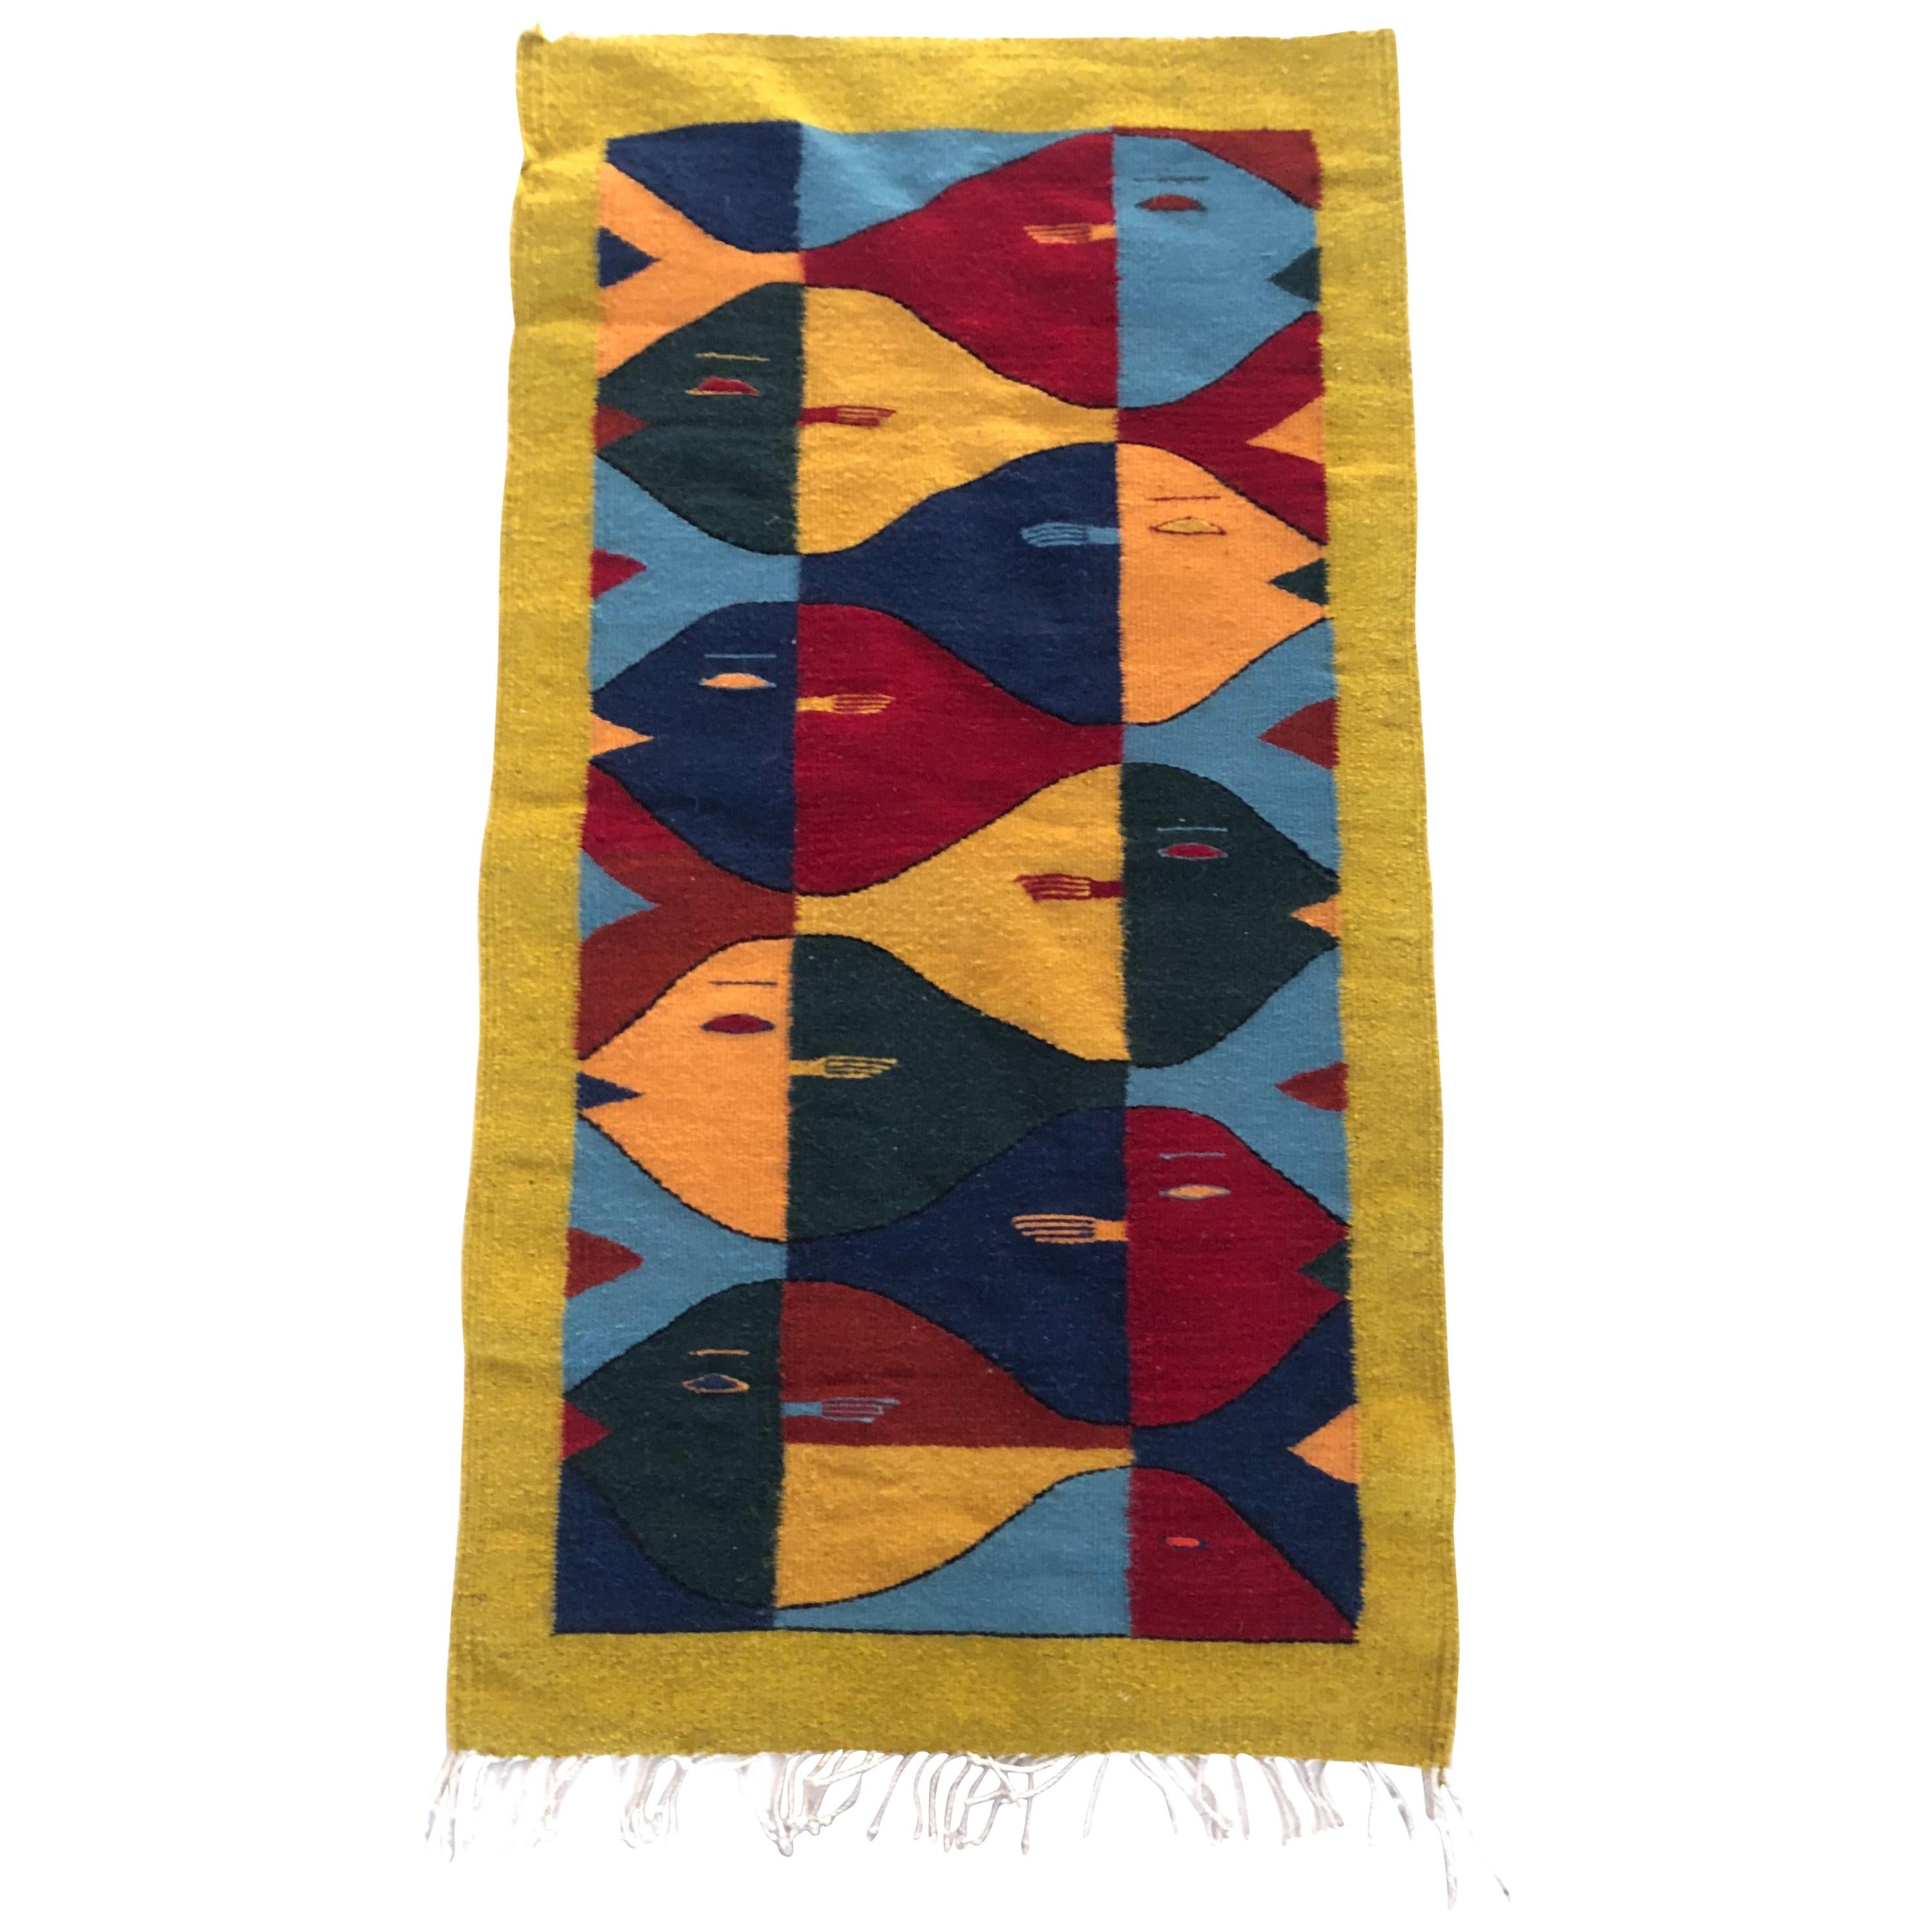 Handwoven Wool Rug/Tapestry after Escher